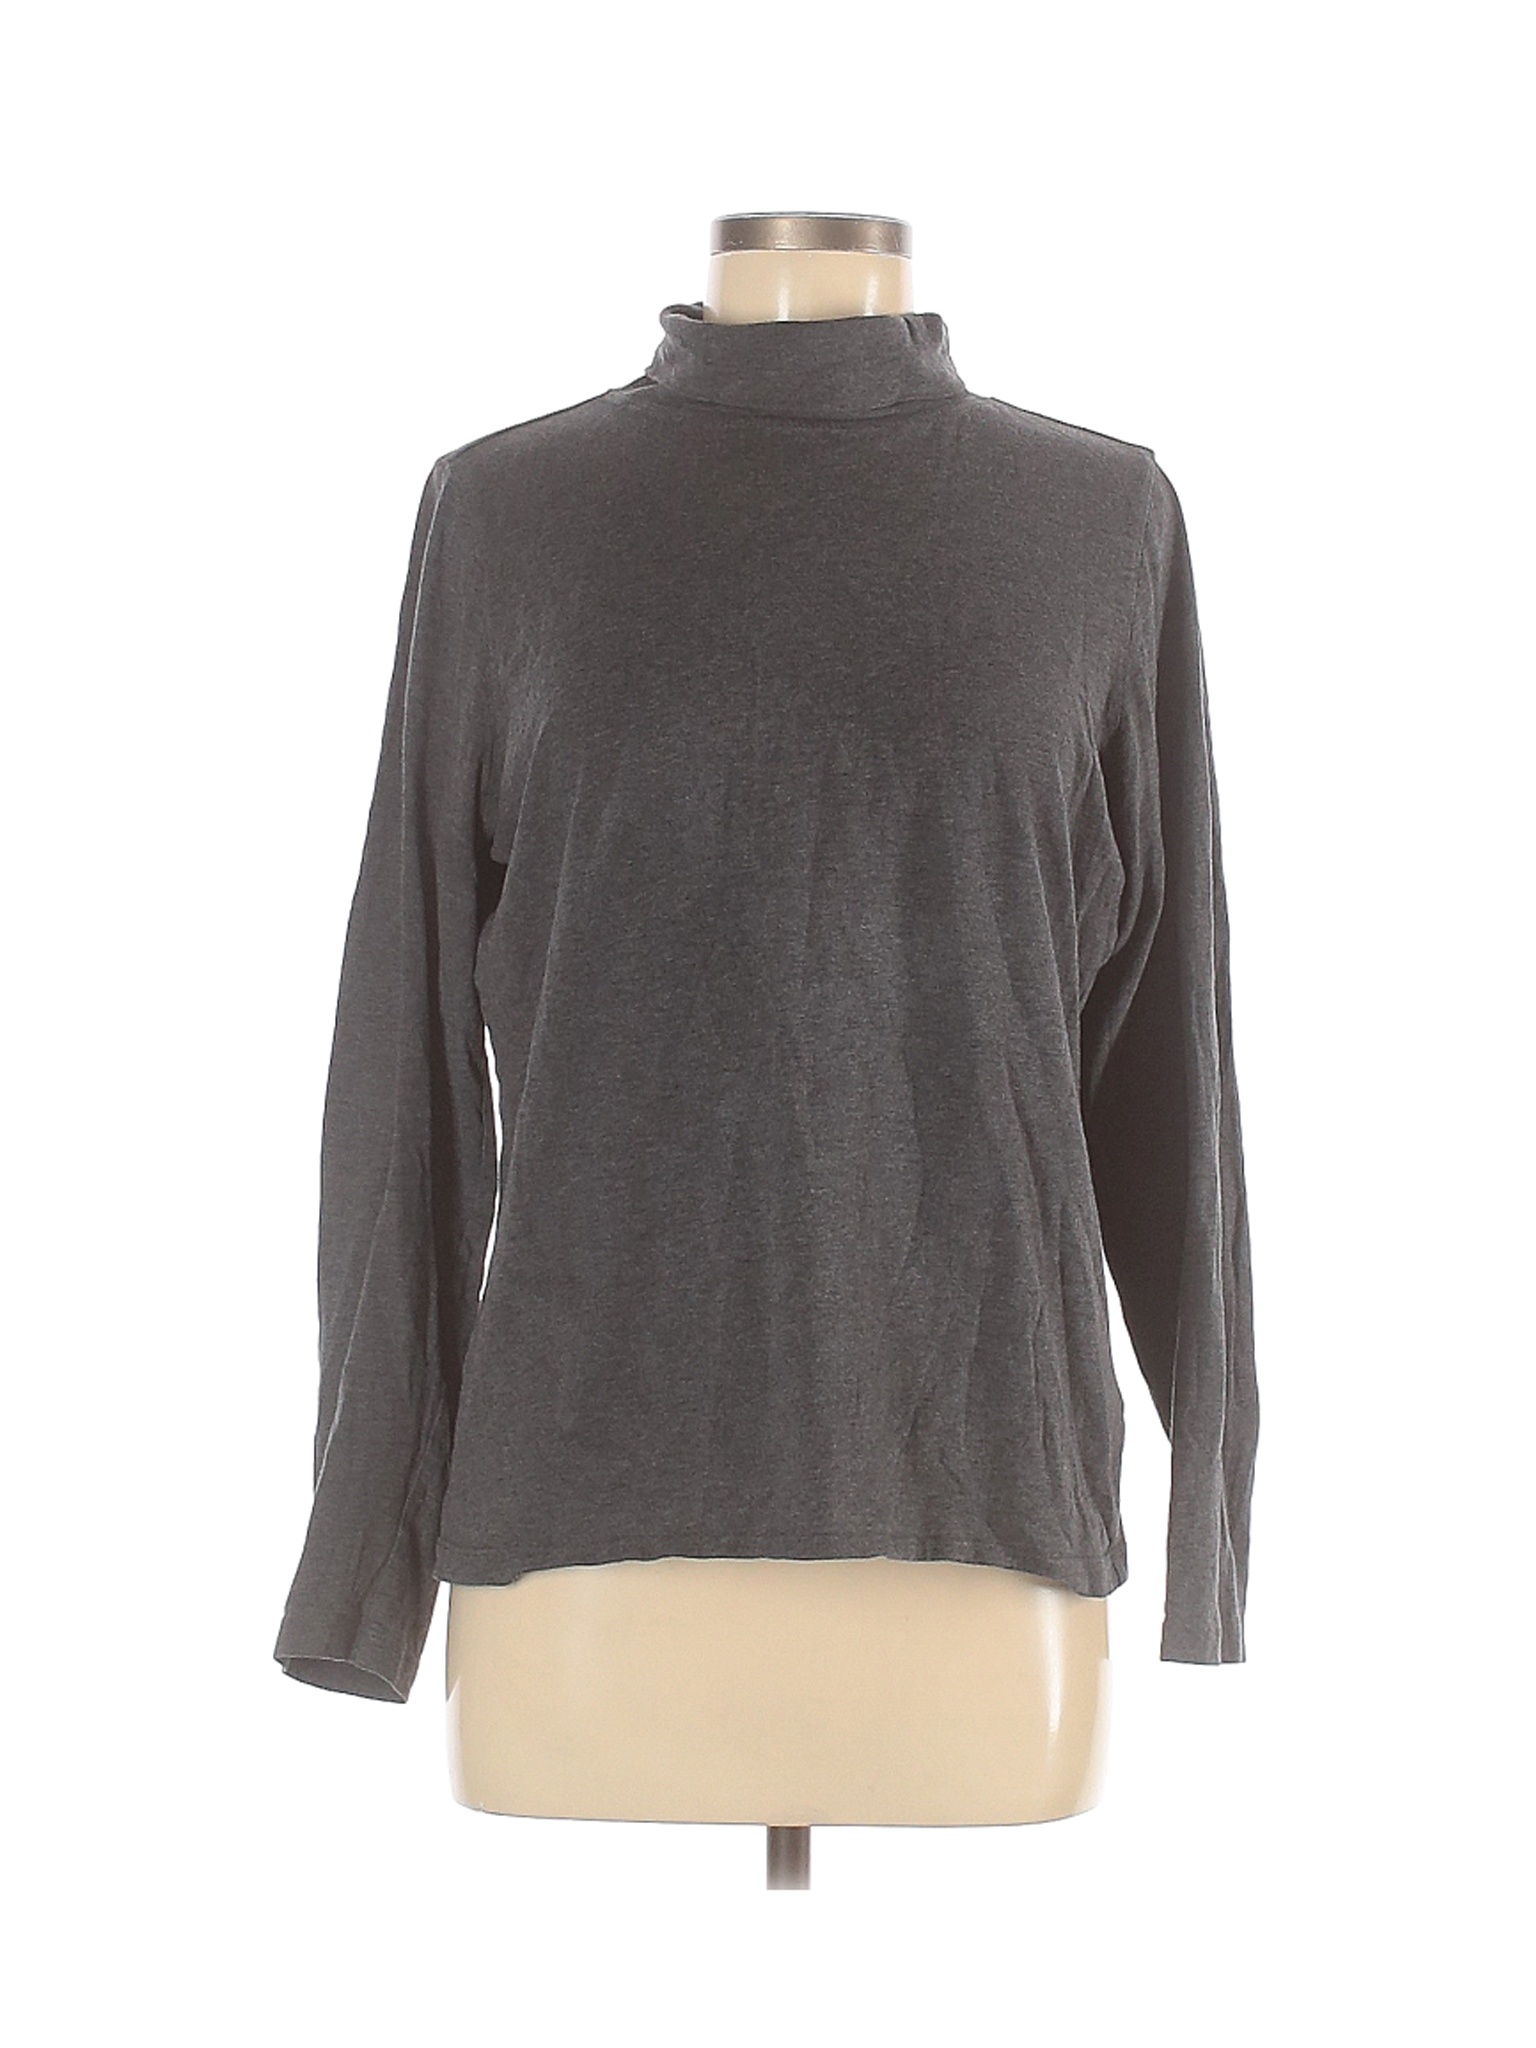 L.L.Bean Women Gray Pullover Sweater M | eBay